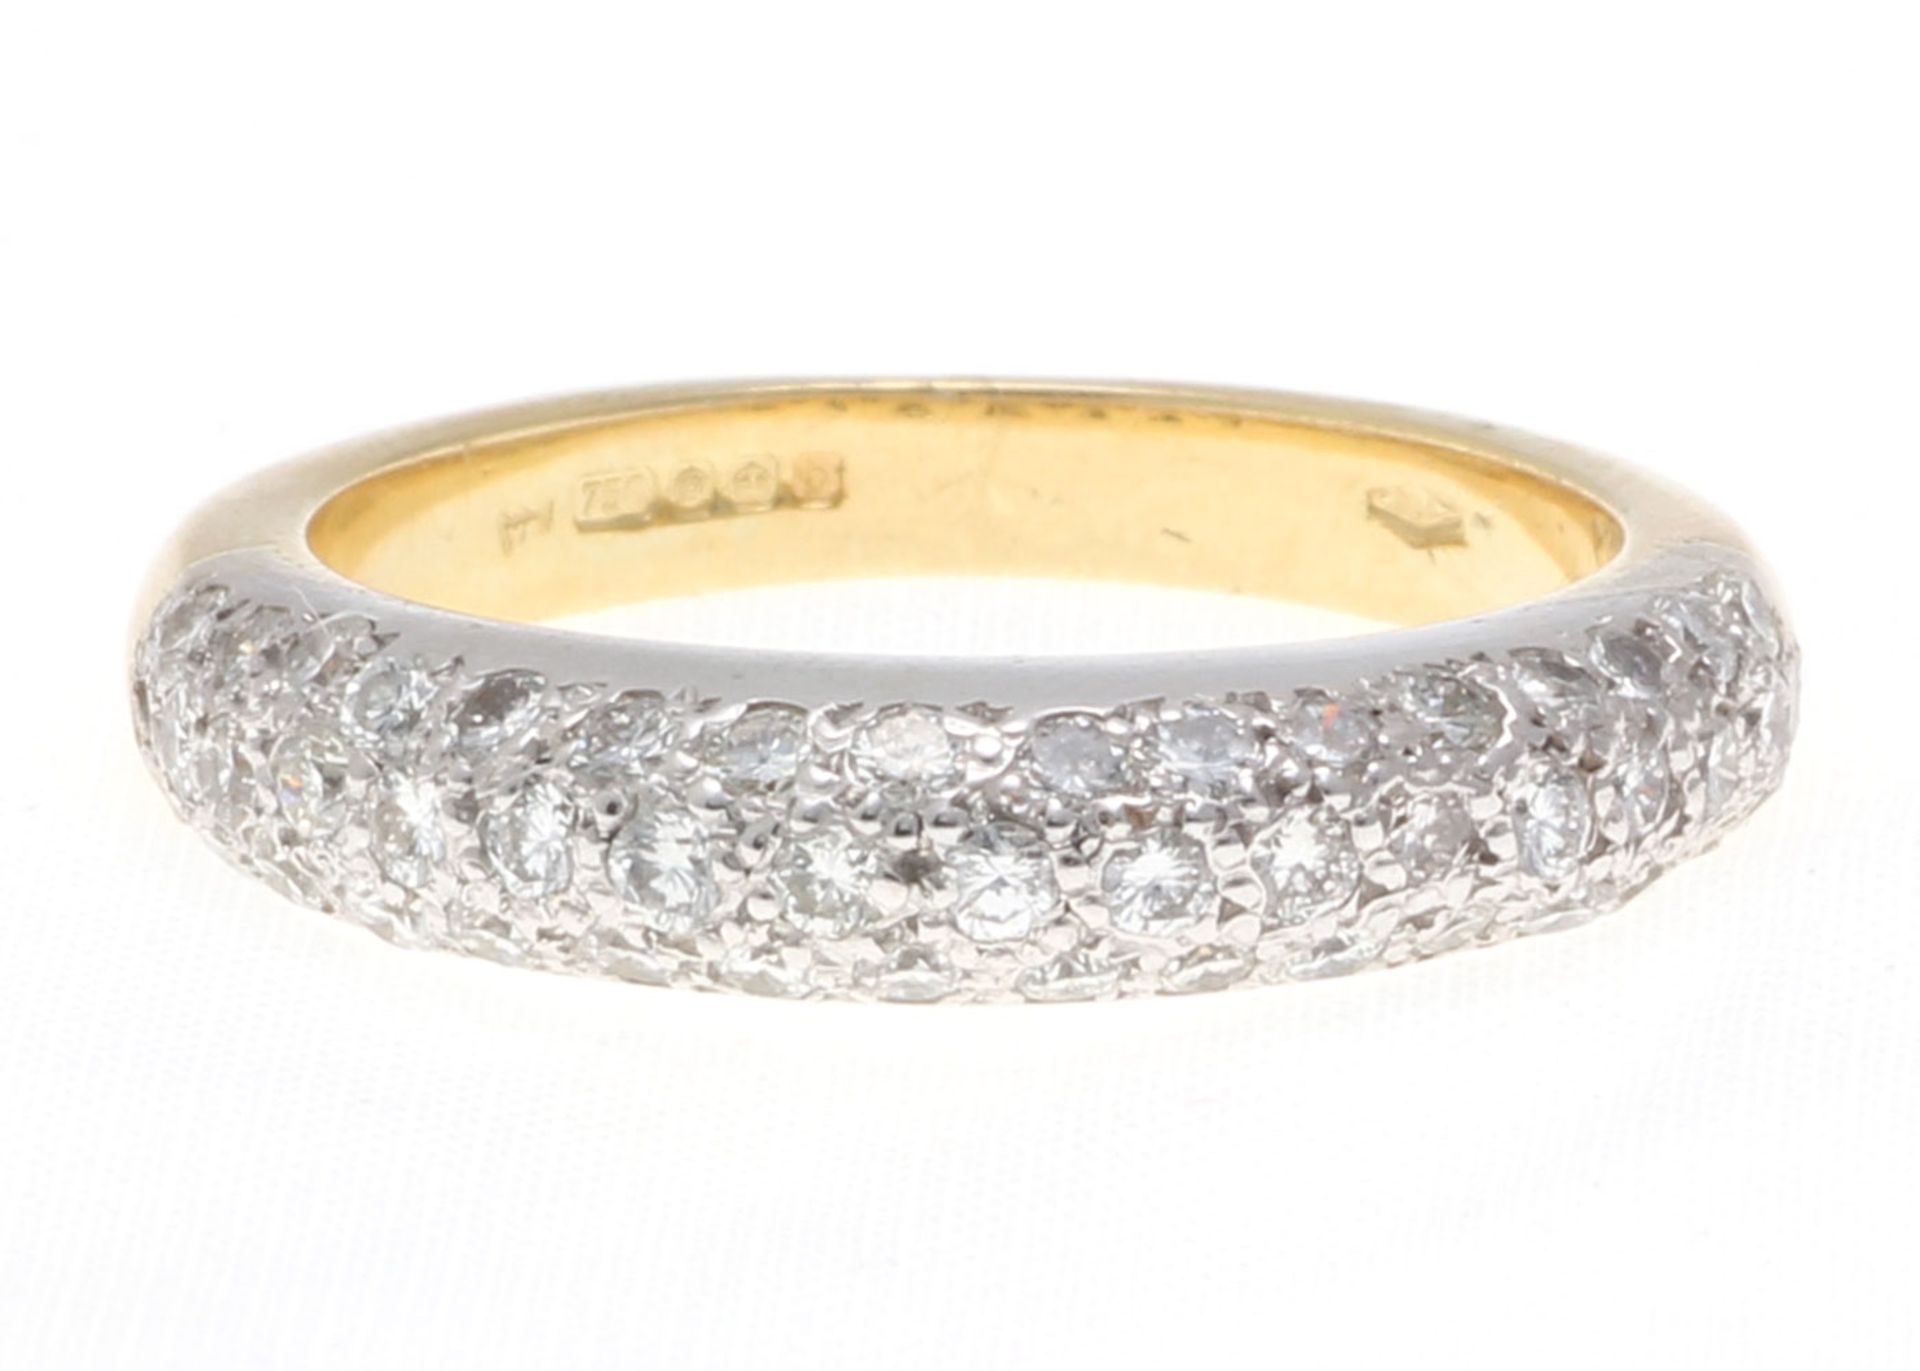 18ct Wedding Band Diamond Ring 1.58 Carats - Valued by AGI £5,624.00 - 18ct Wedding Band Diamond